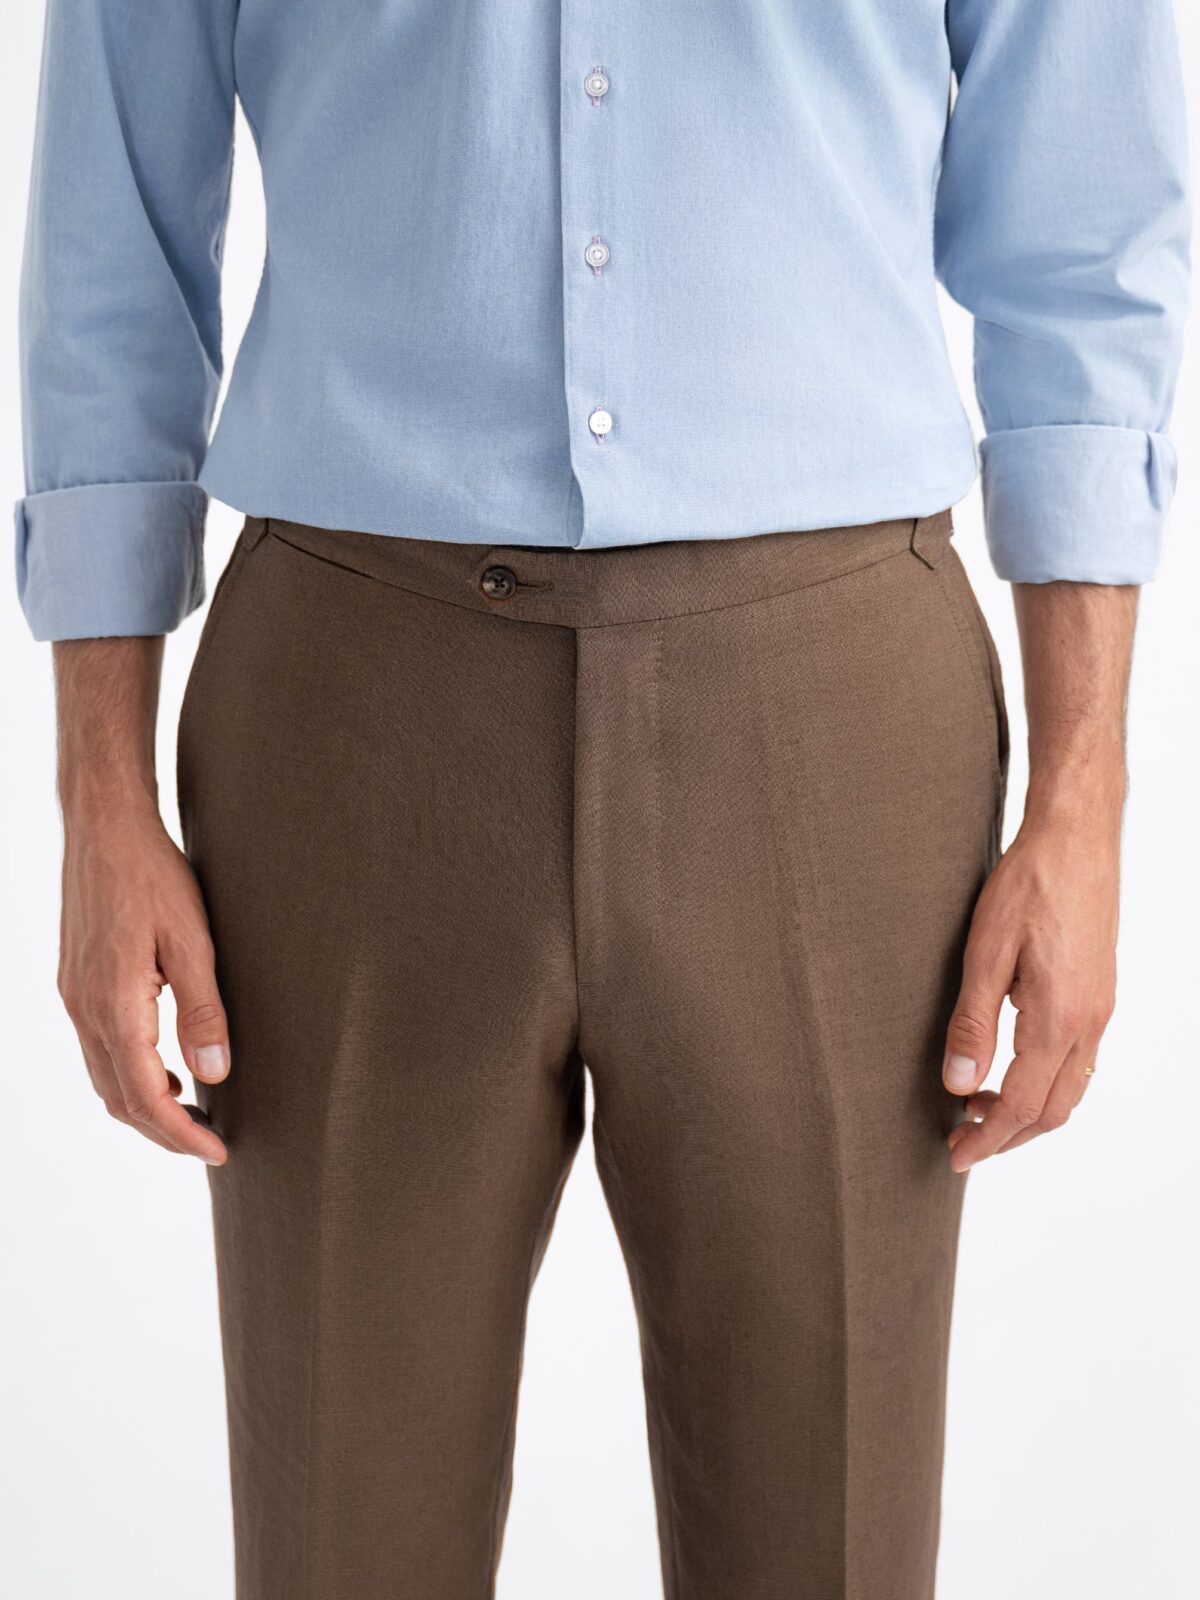 THE CIGGIES Cream Linen Cigarette Pants Custom Fit Tapered Trouser